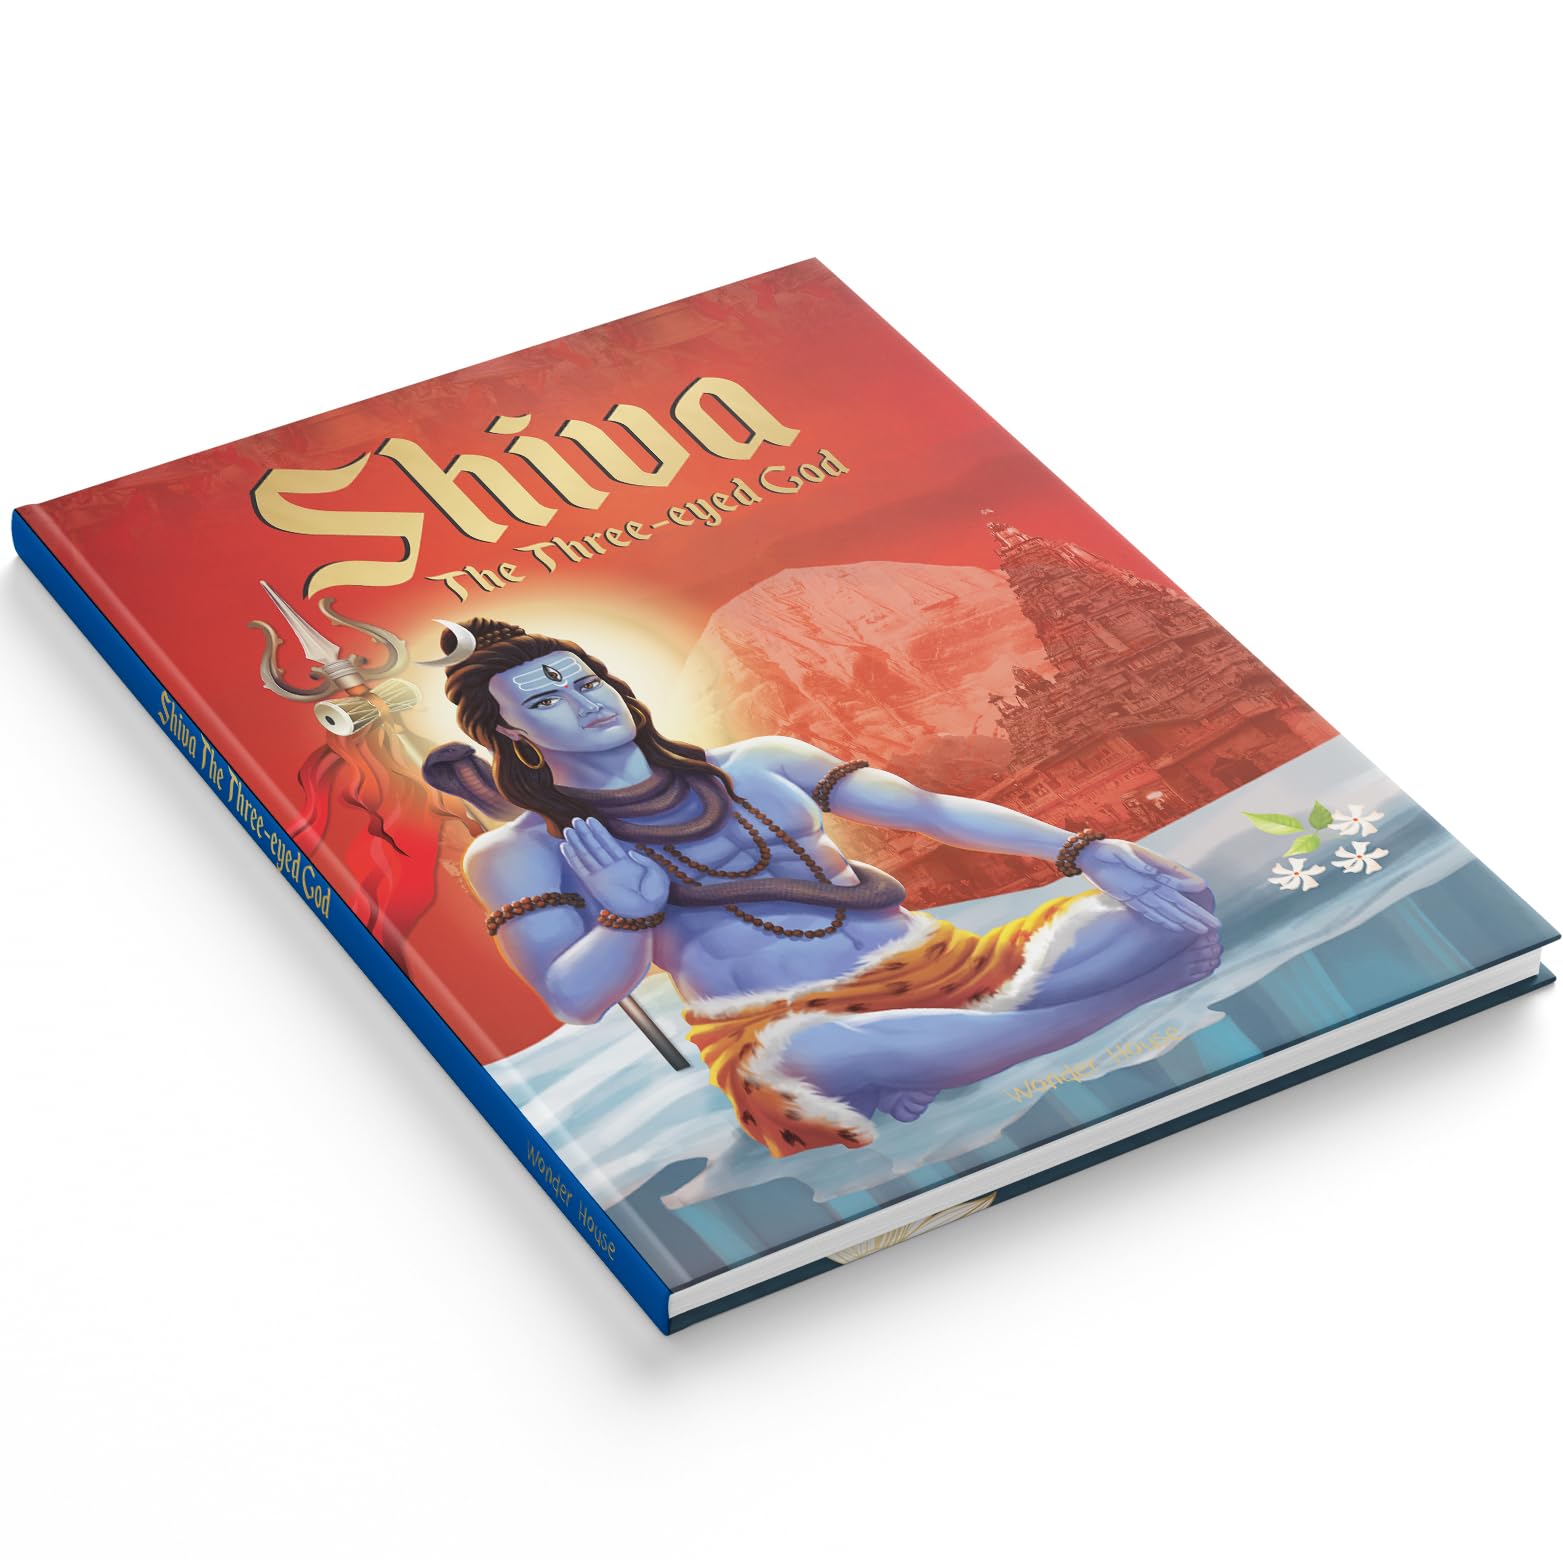 Shiva: The Three-Eyed God (Tales from Indian Mythology)